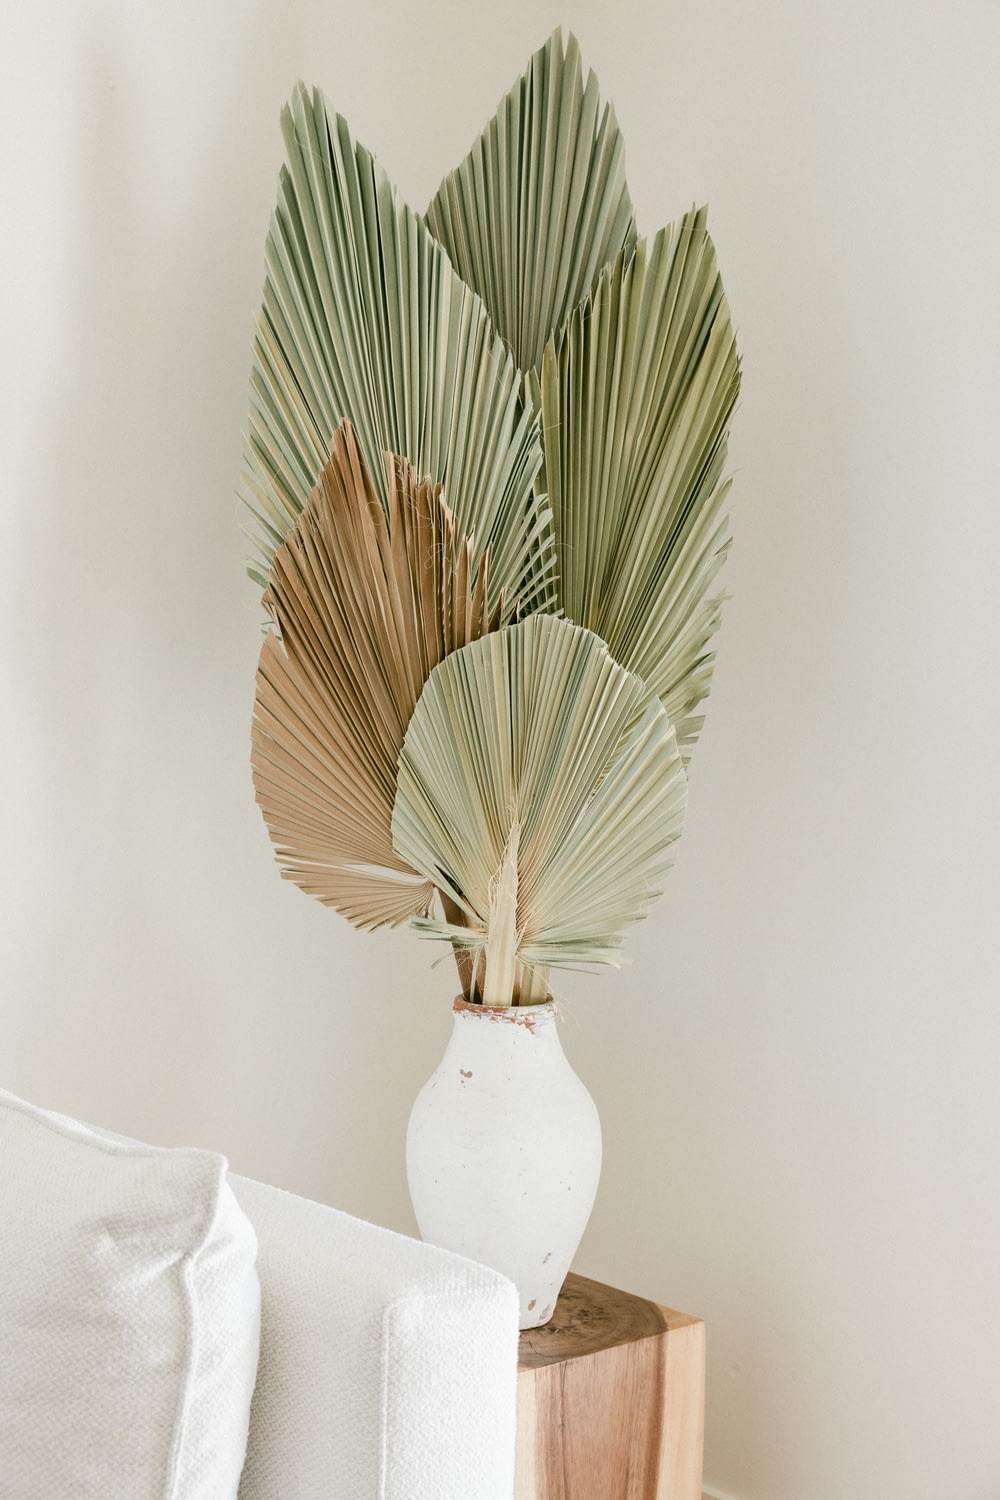 green and brown plant on white ceramic vase